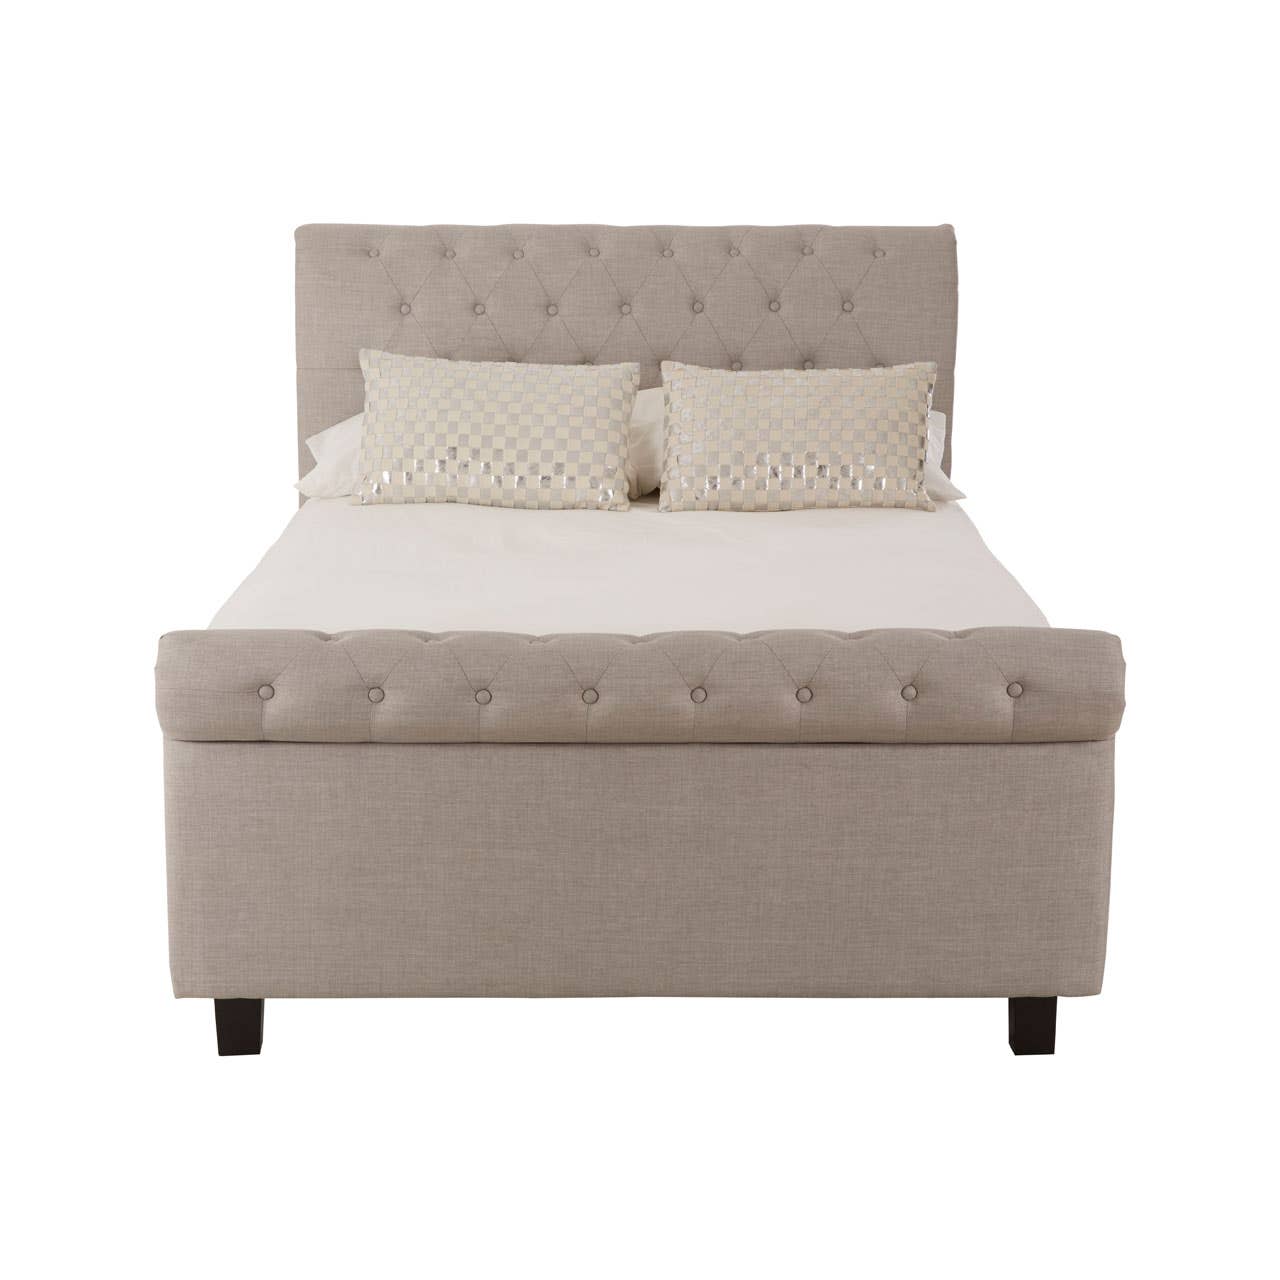 Orlando Light Grey Double Ottoman Bed